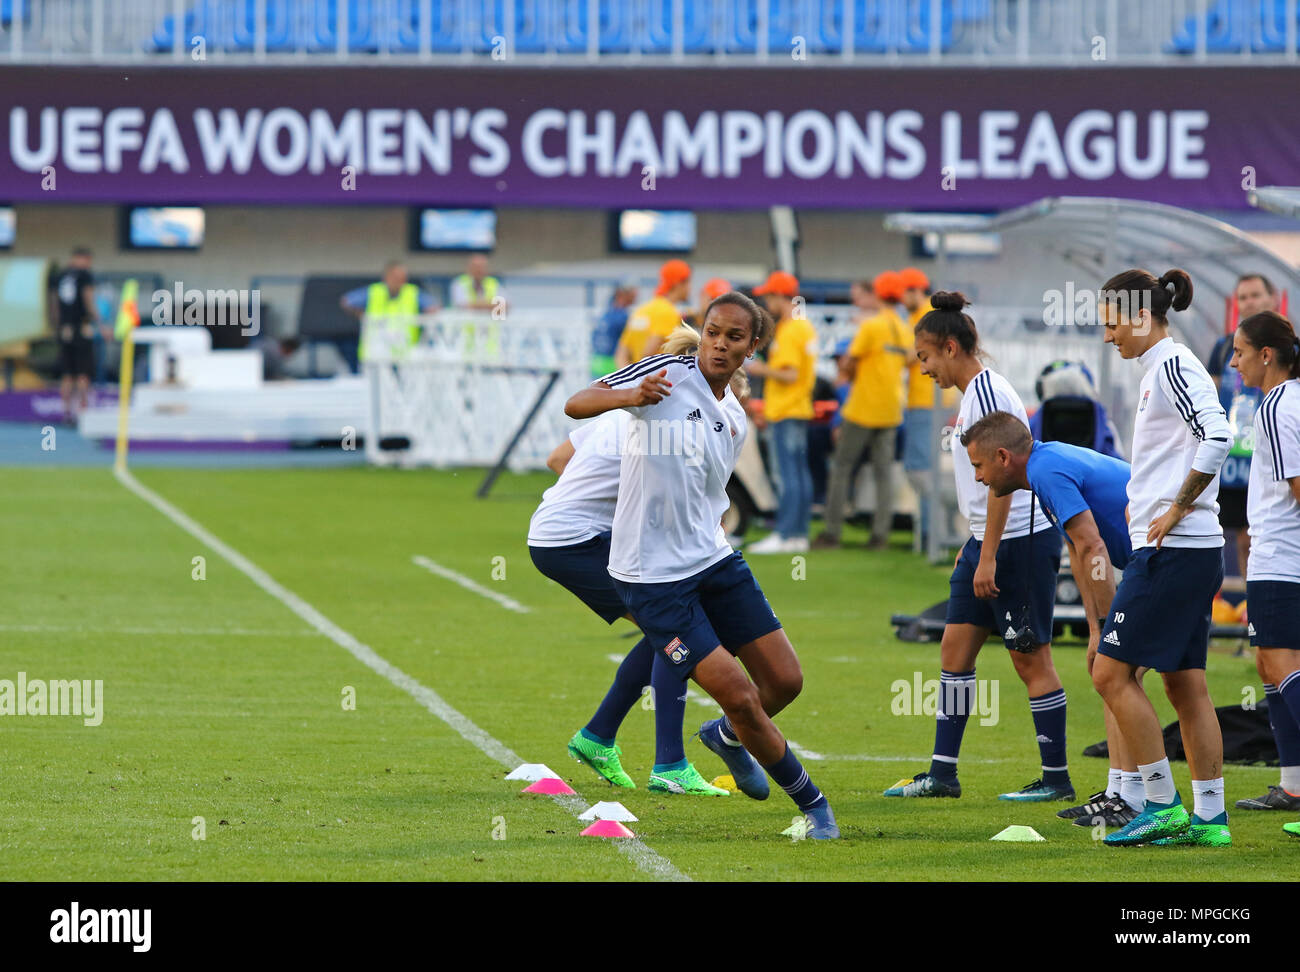 Marjolen Wafula Nekesa of Slavia scores during the final round of women  Champions League